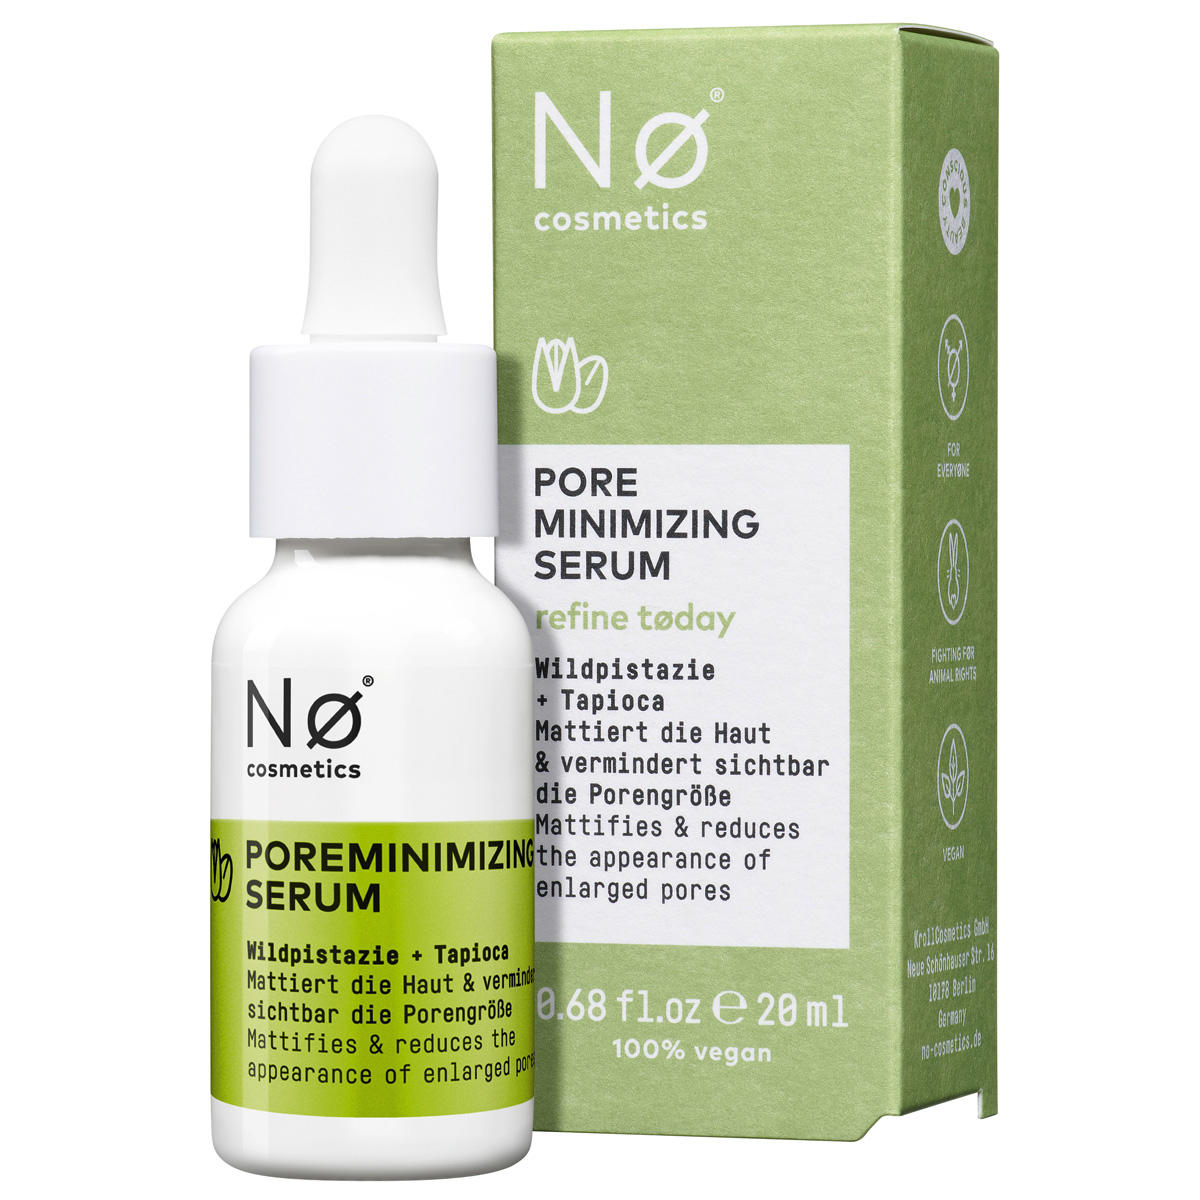 Nø Cosmetics refine tøday Poreminimizing Serum 20 ml - 1